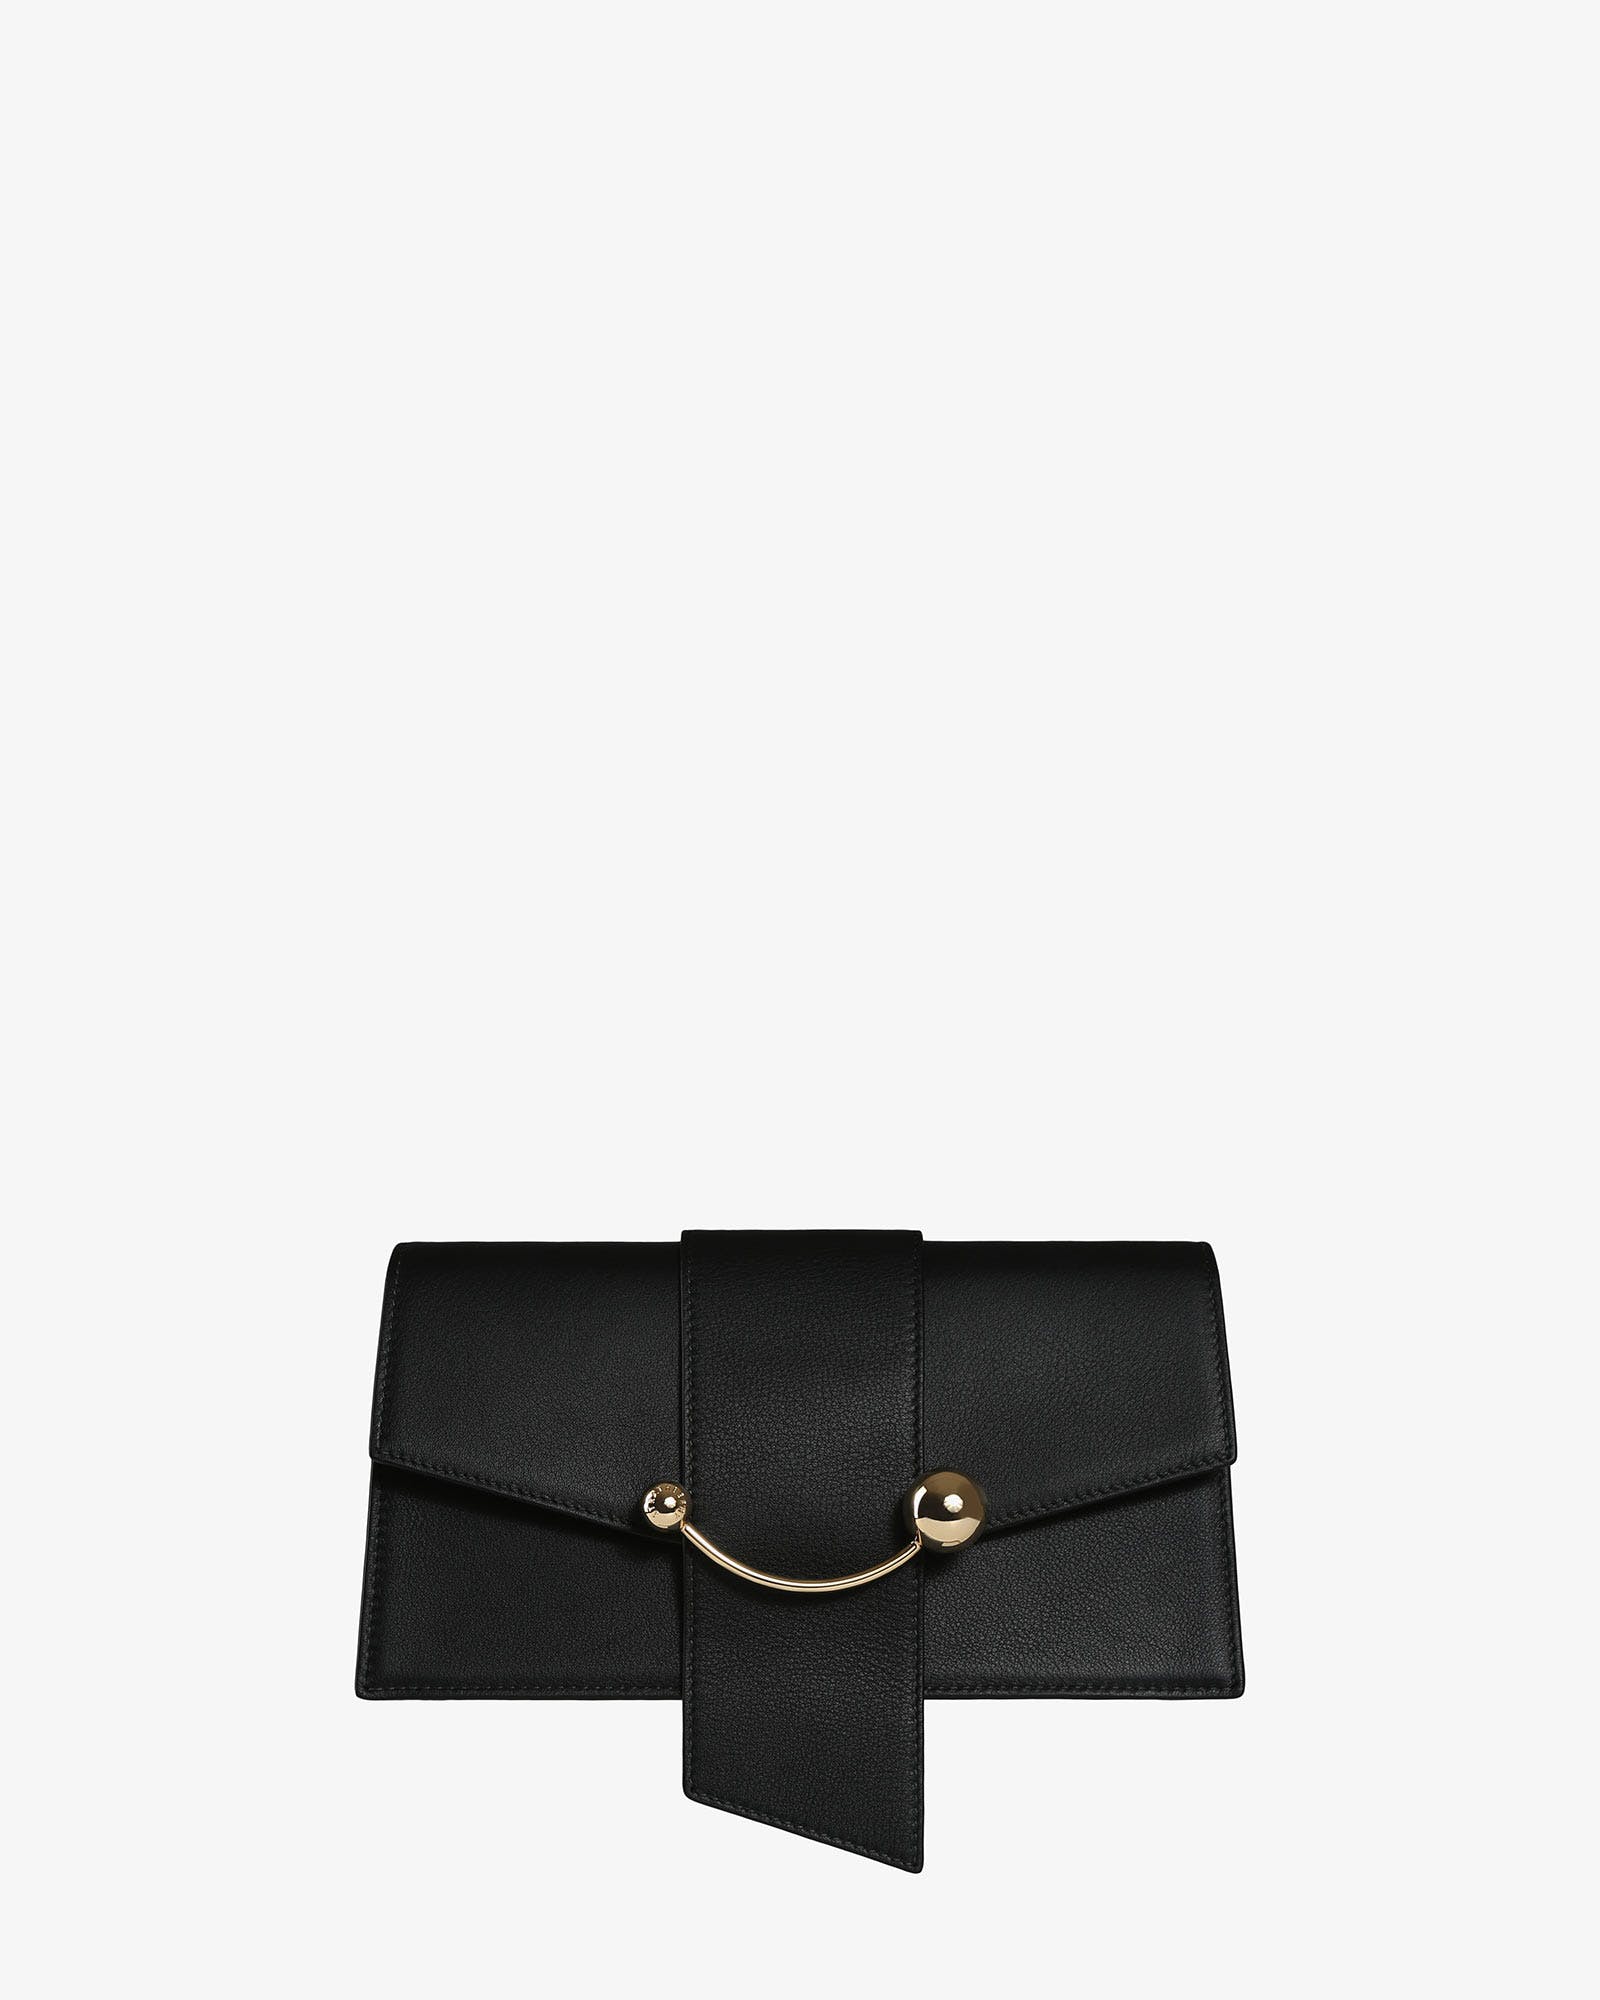 Strathberry - Mini Crescent - Leather Mini Shoulder Bag - Black